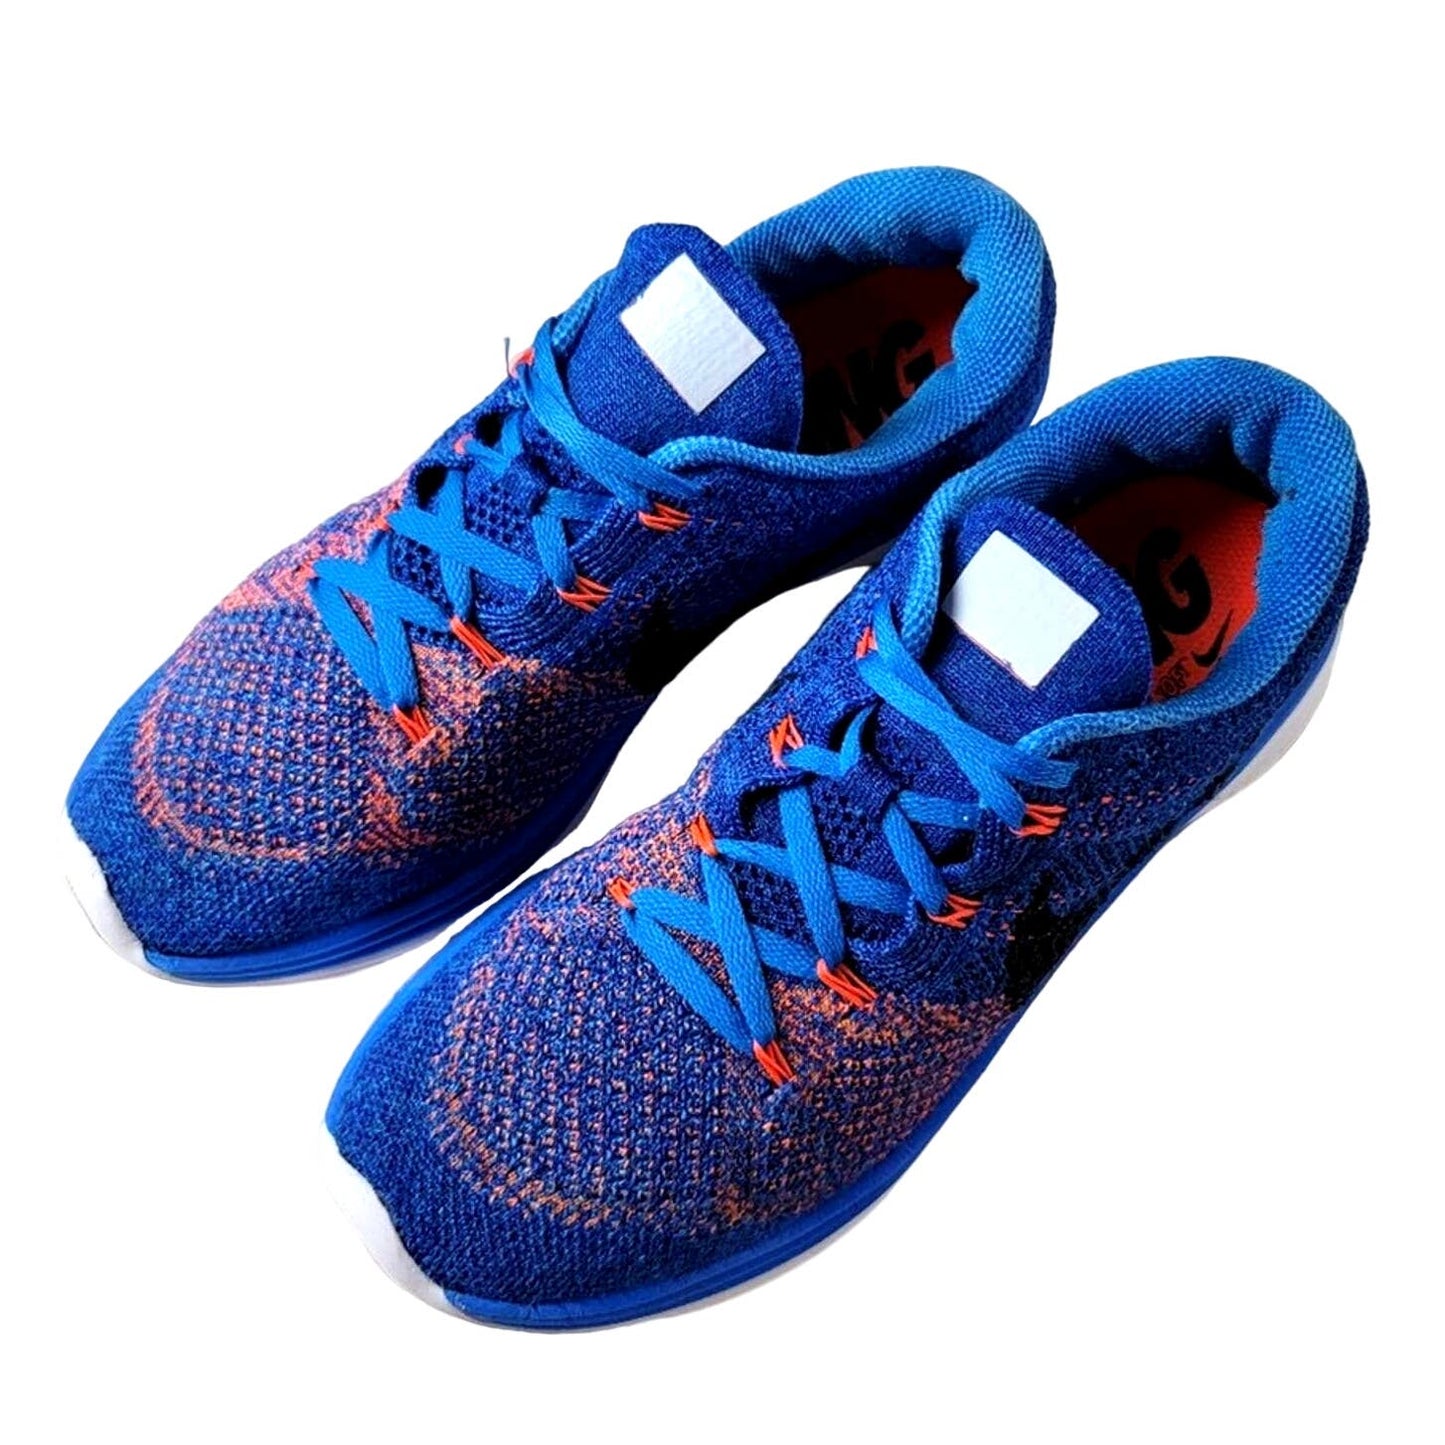 Nike Flyknit Lunar3 Running Shoes - 8/9.5